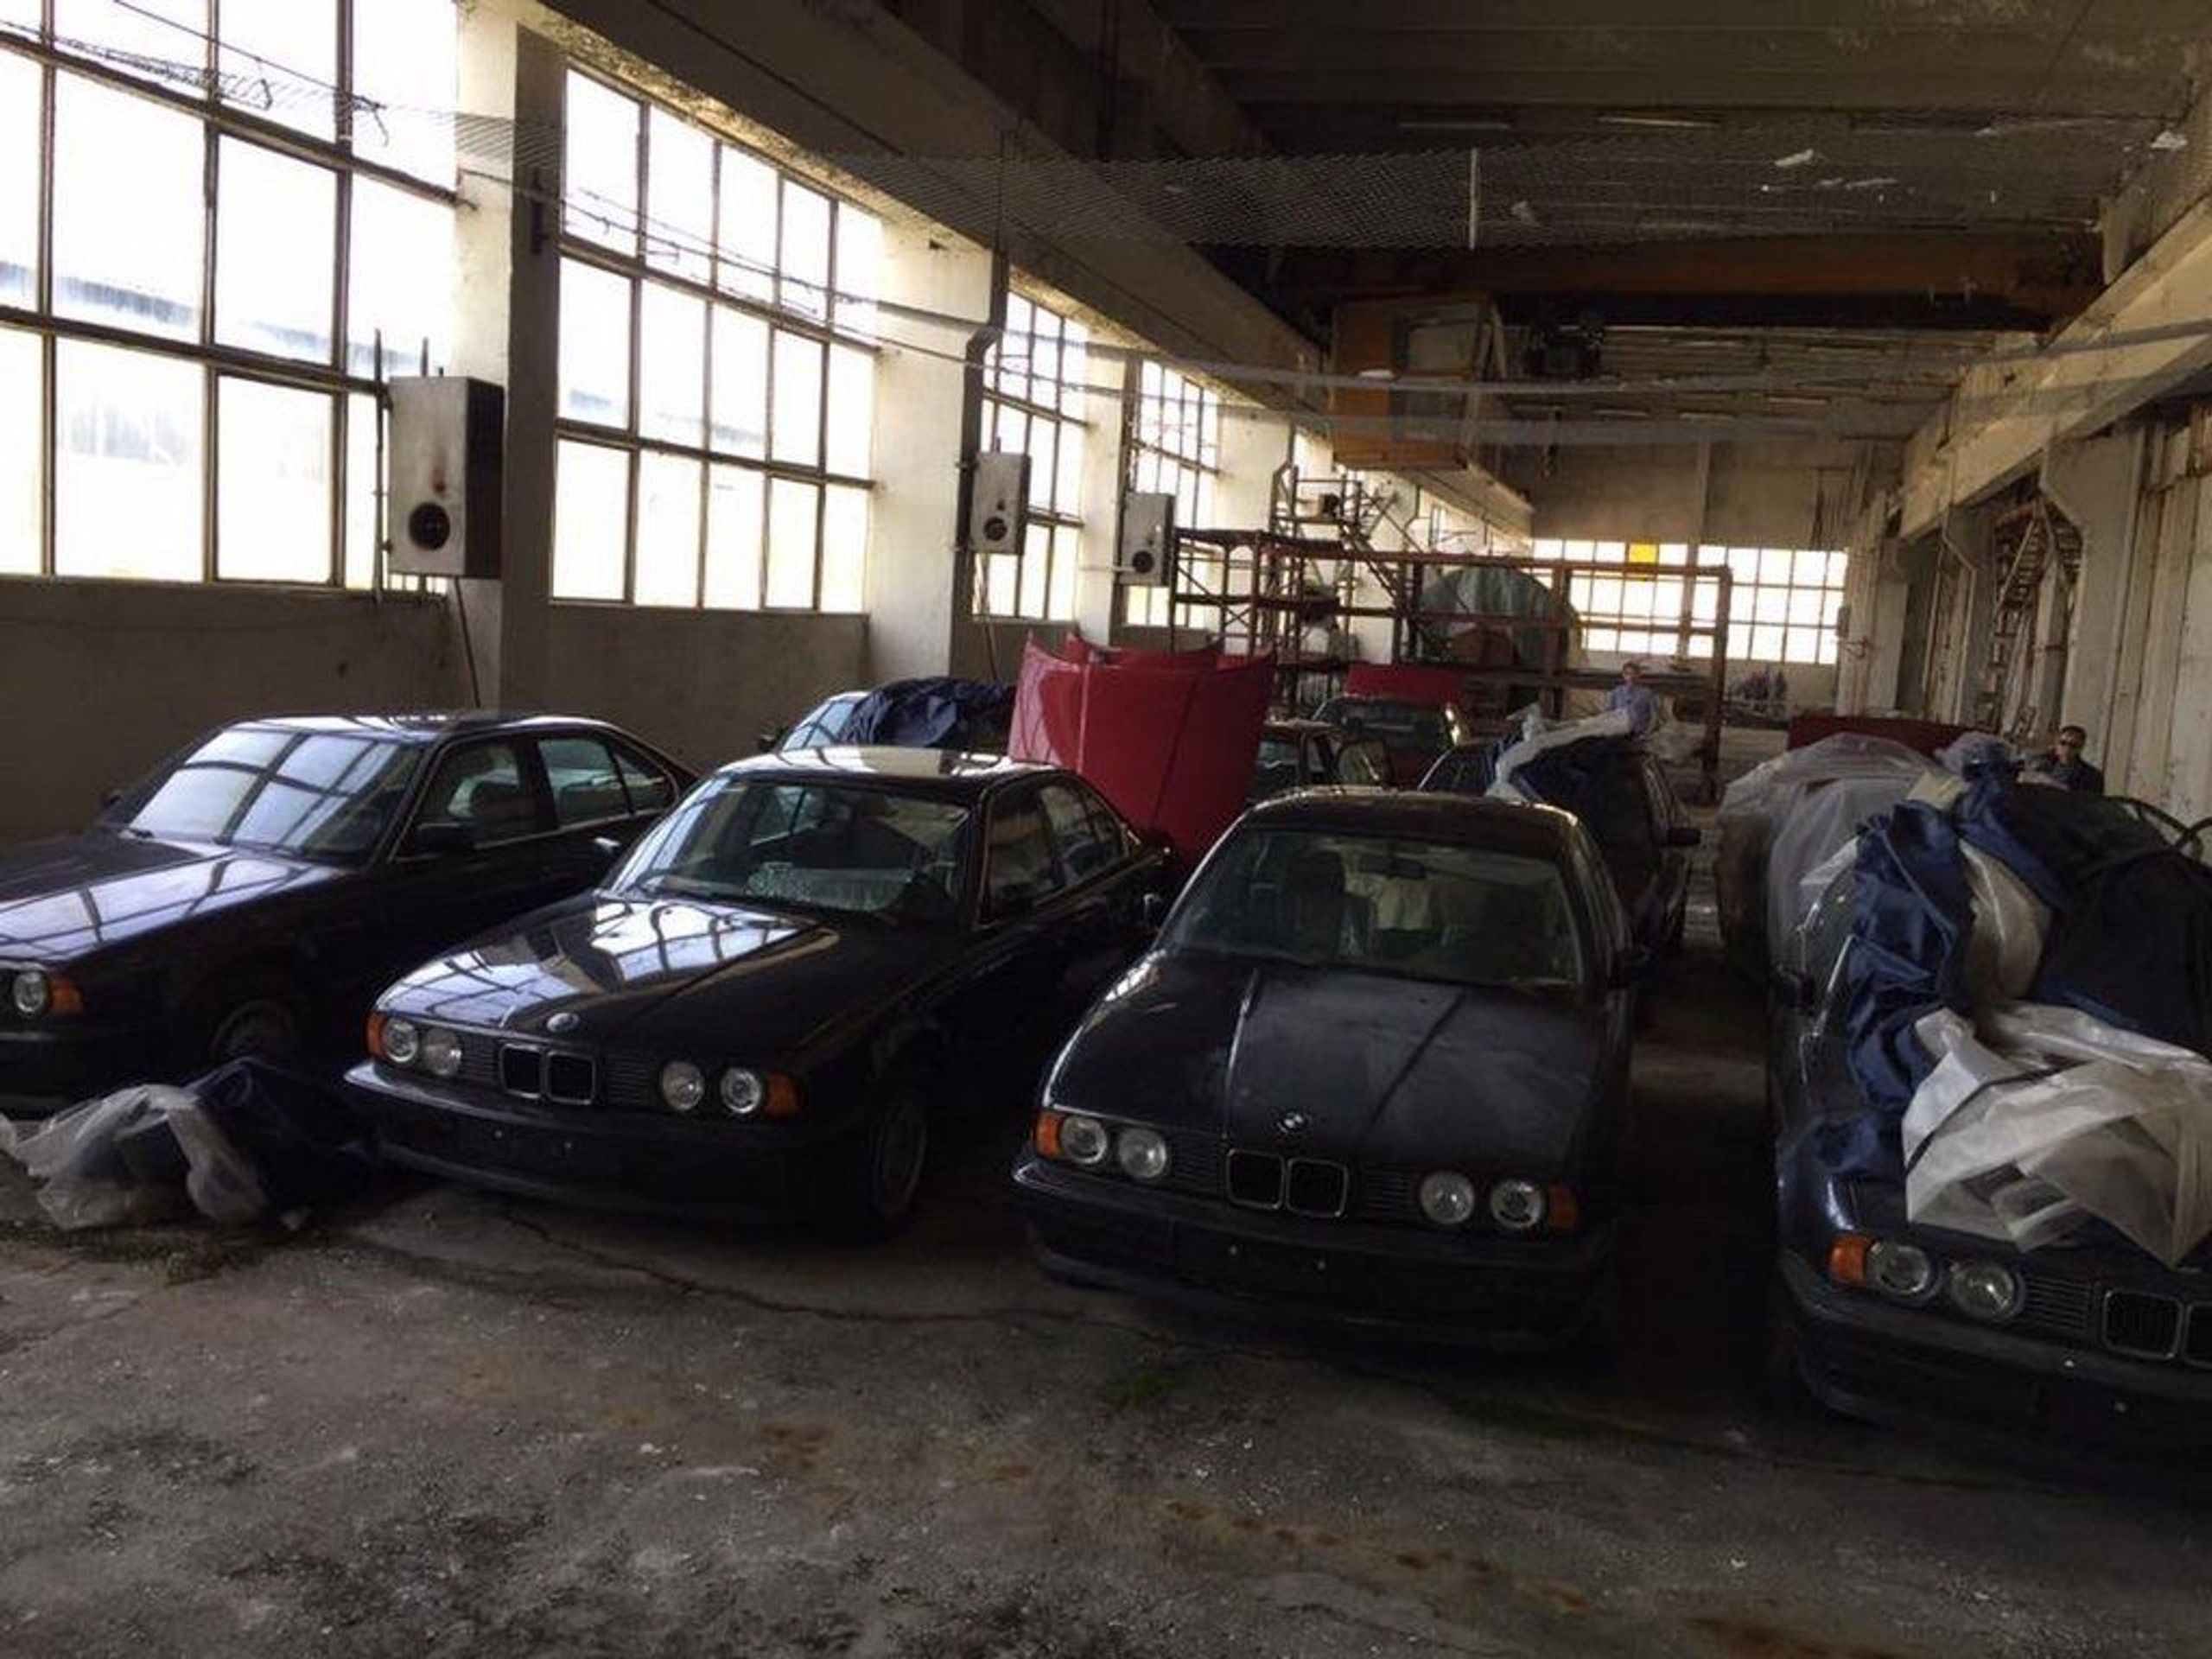 Sklad 25 let ukrýval 11 vozů BMW řady 5 - 34 - Fotogalerie: V bulharském skladu se 25 let skrýval poklad (4/16)